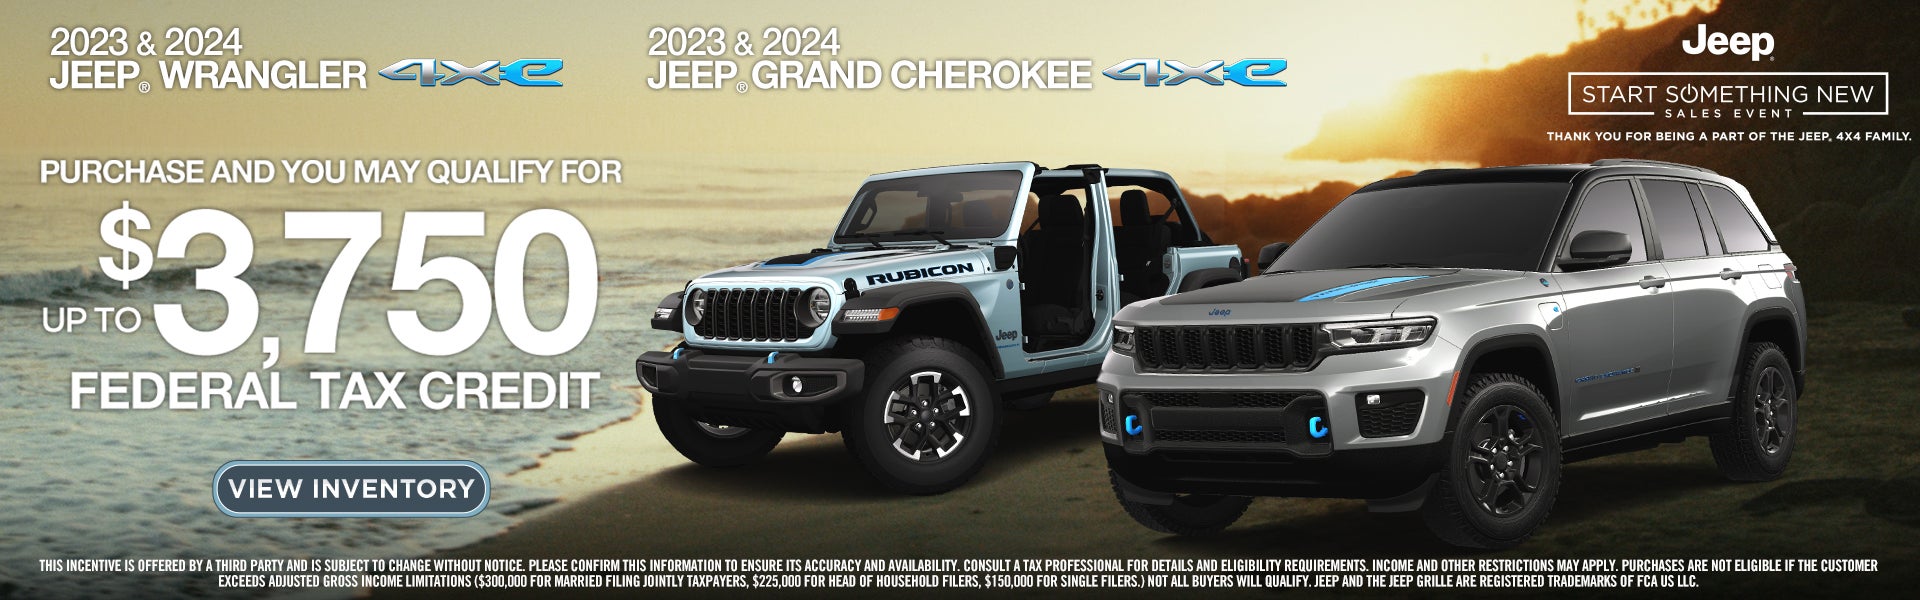 2023 & 2024 Jeep Wrangler and Grand Chero Federal Tax Credit